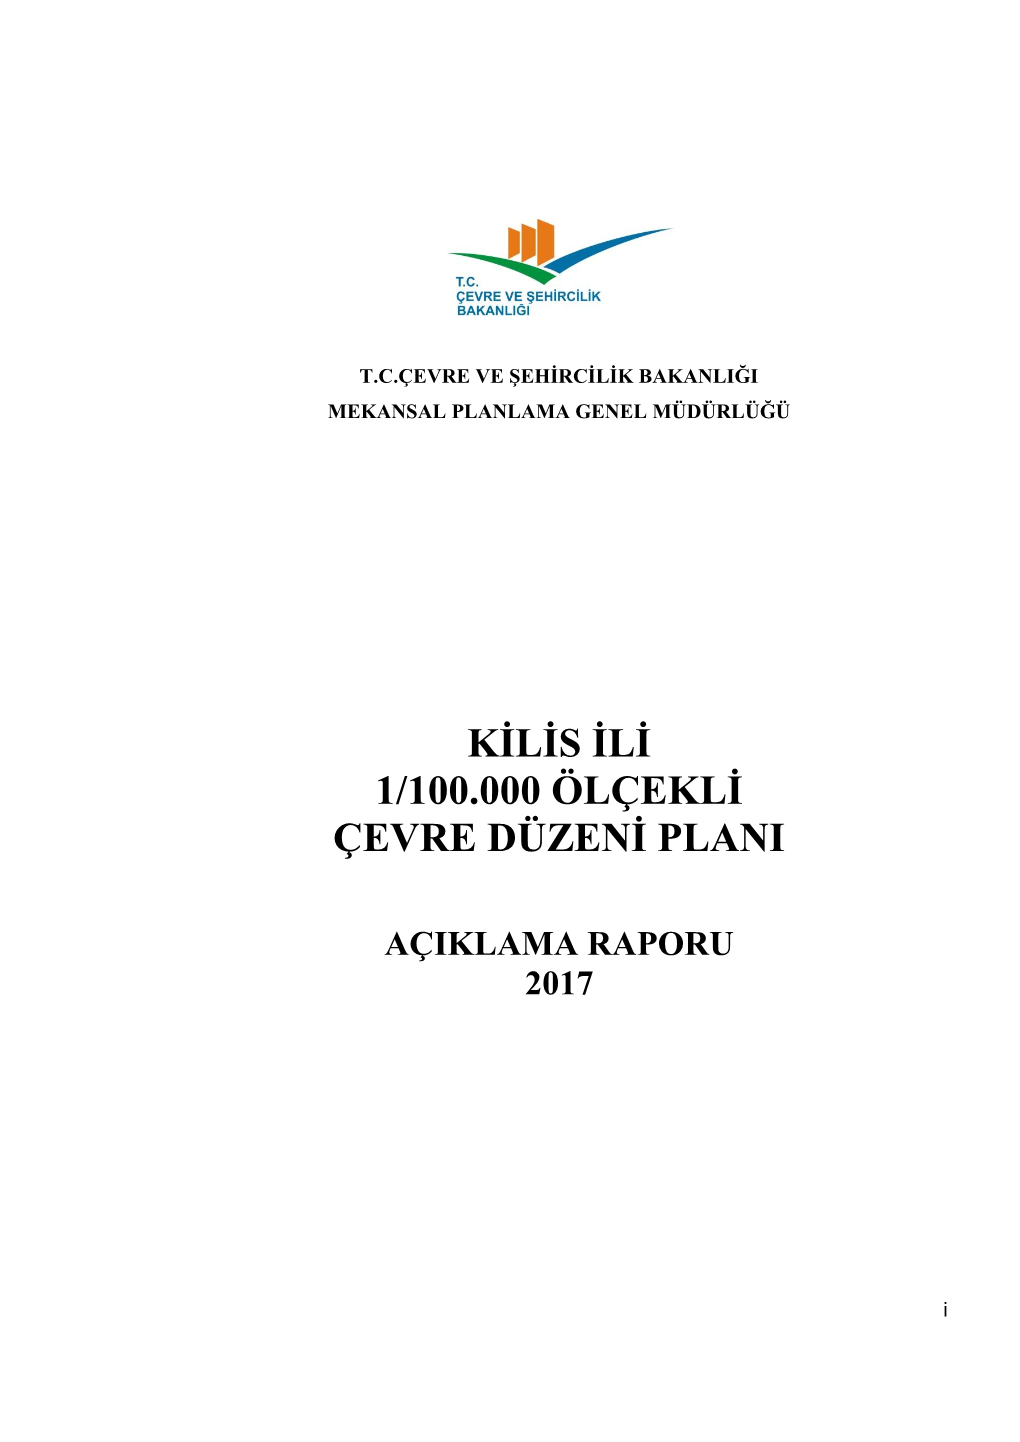 Kġlġs Ġlġ 1/100.000 Ölçeklġ Çevre Düzenġ Plani